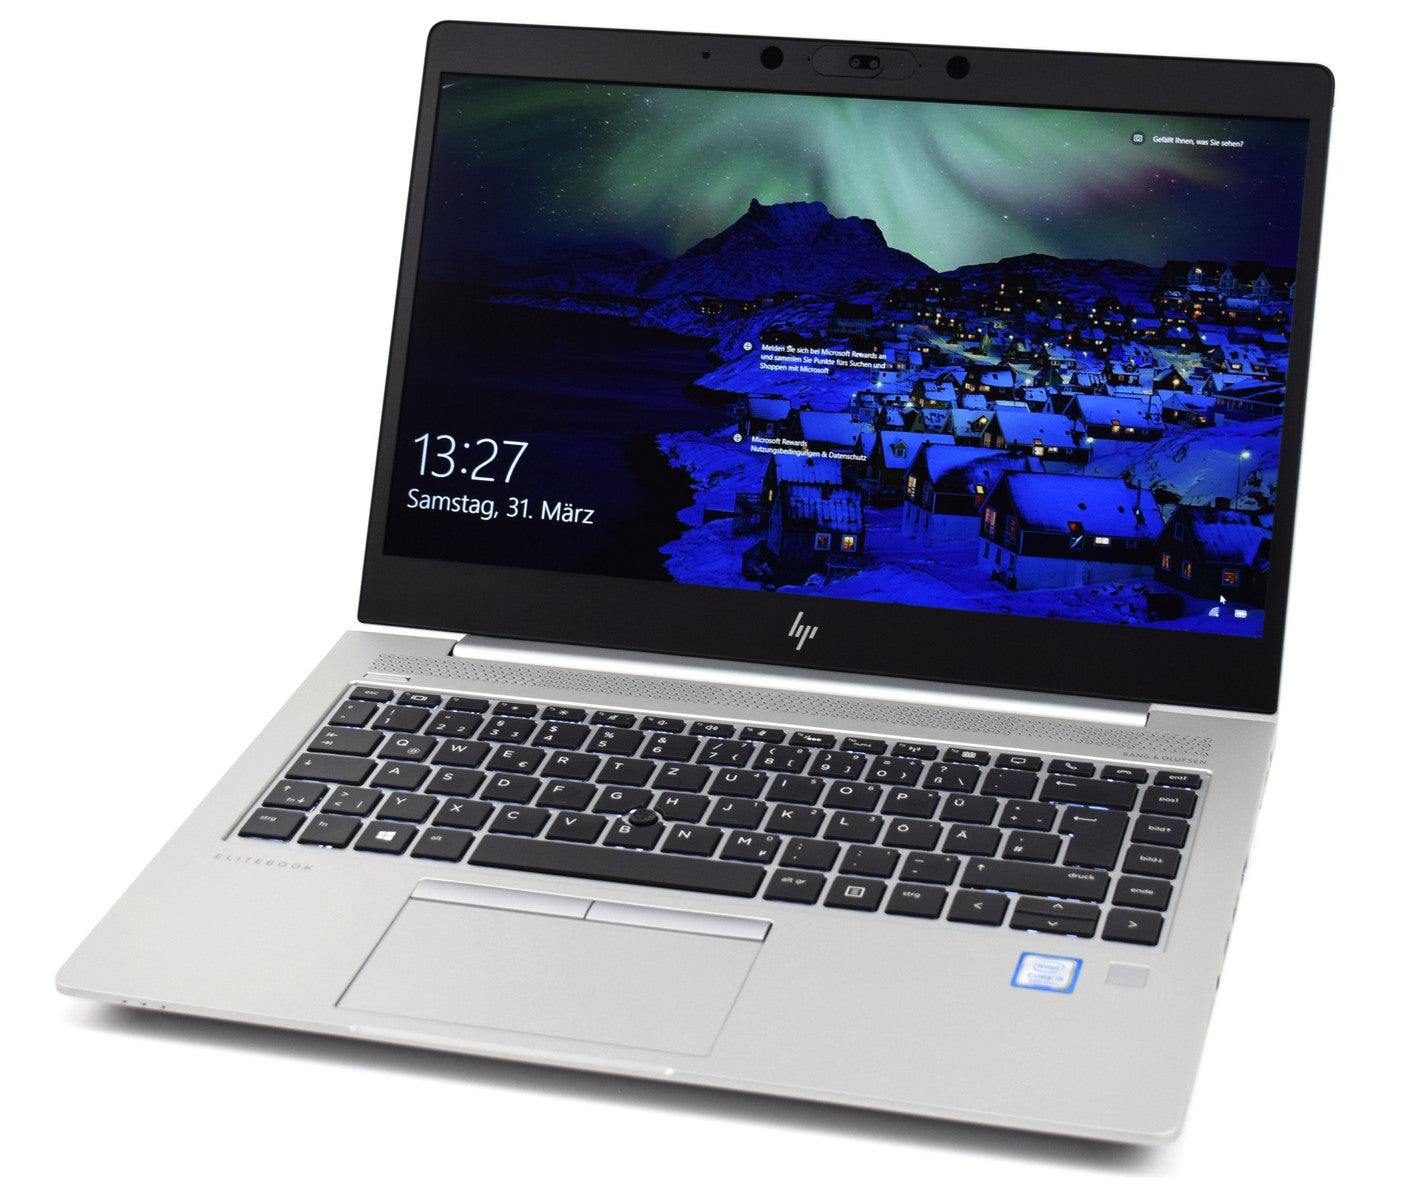 HP Elitebook 840 G5 14" i5 8th Gen 8Gb Ram 500GB SSD  - Very Good Condition